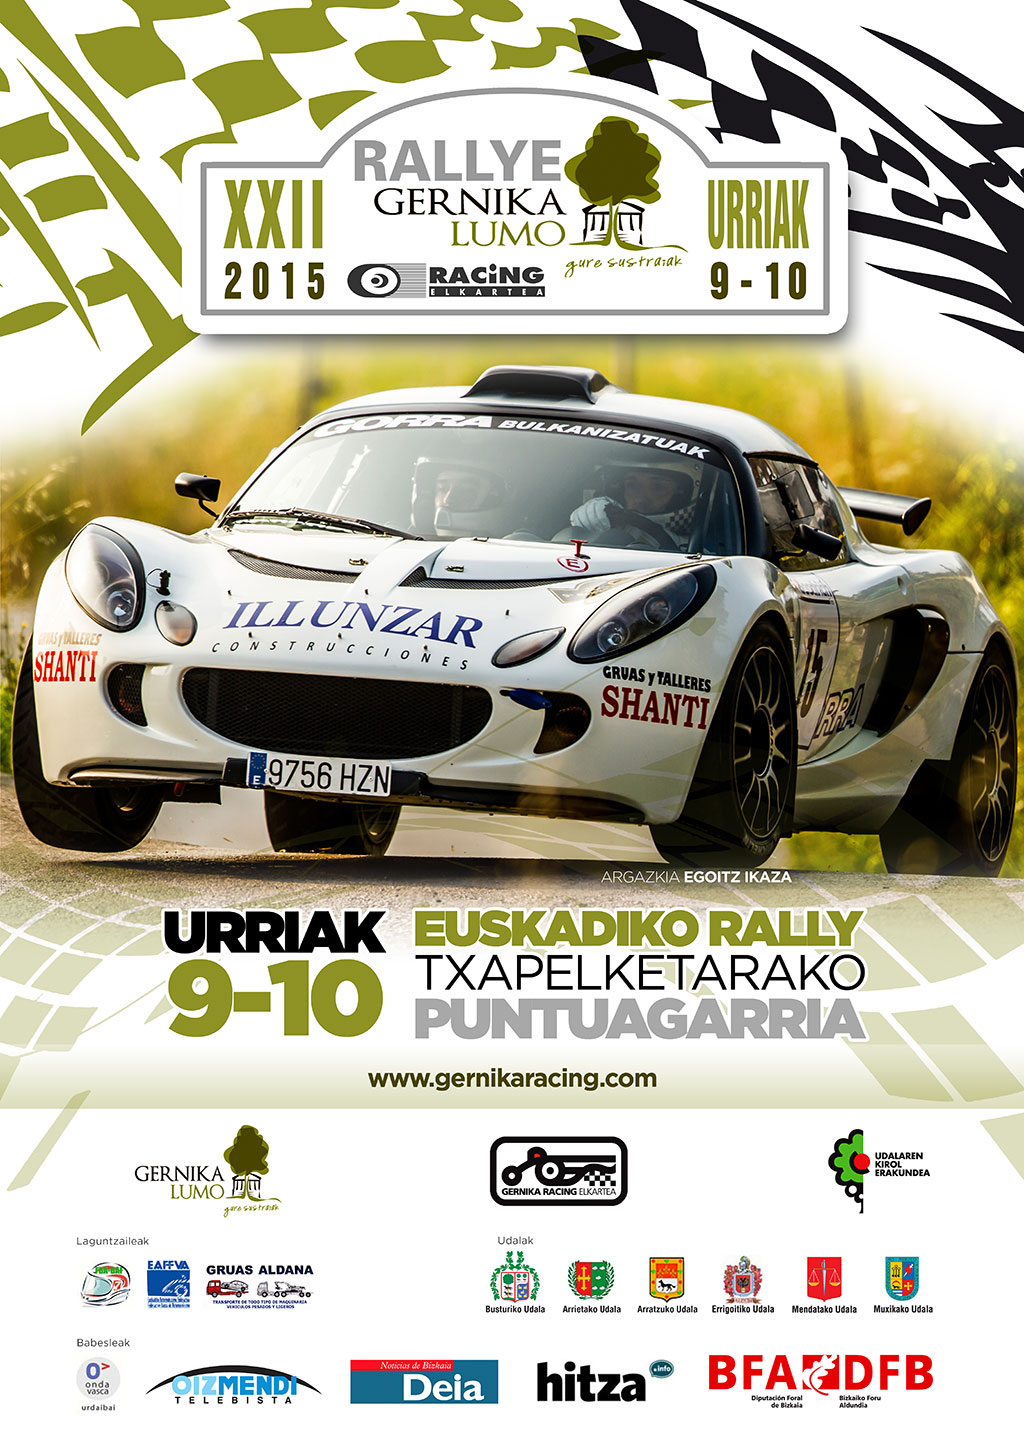 Cartel XXII Rallye Gernika-lumo 2015